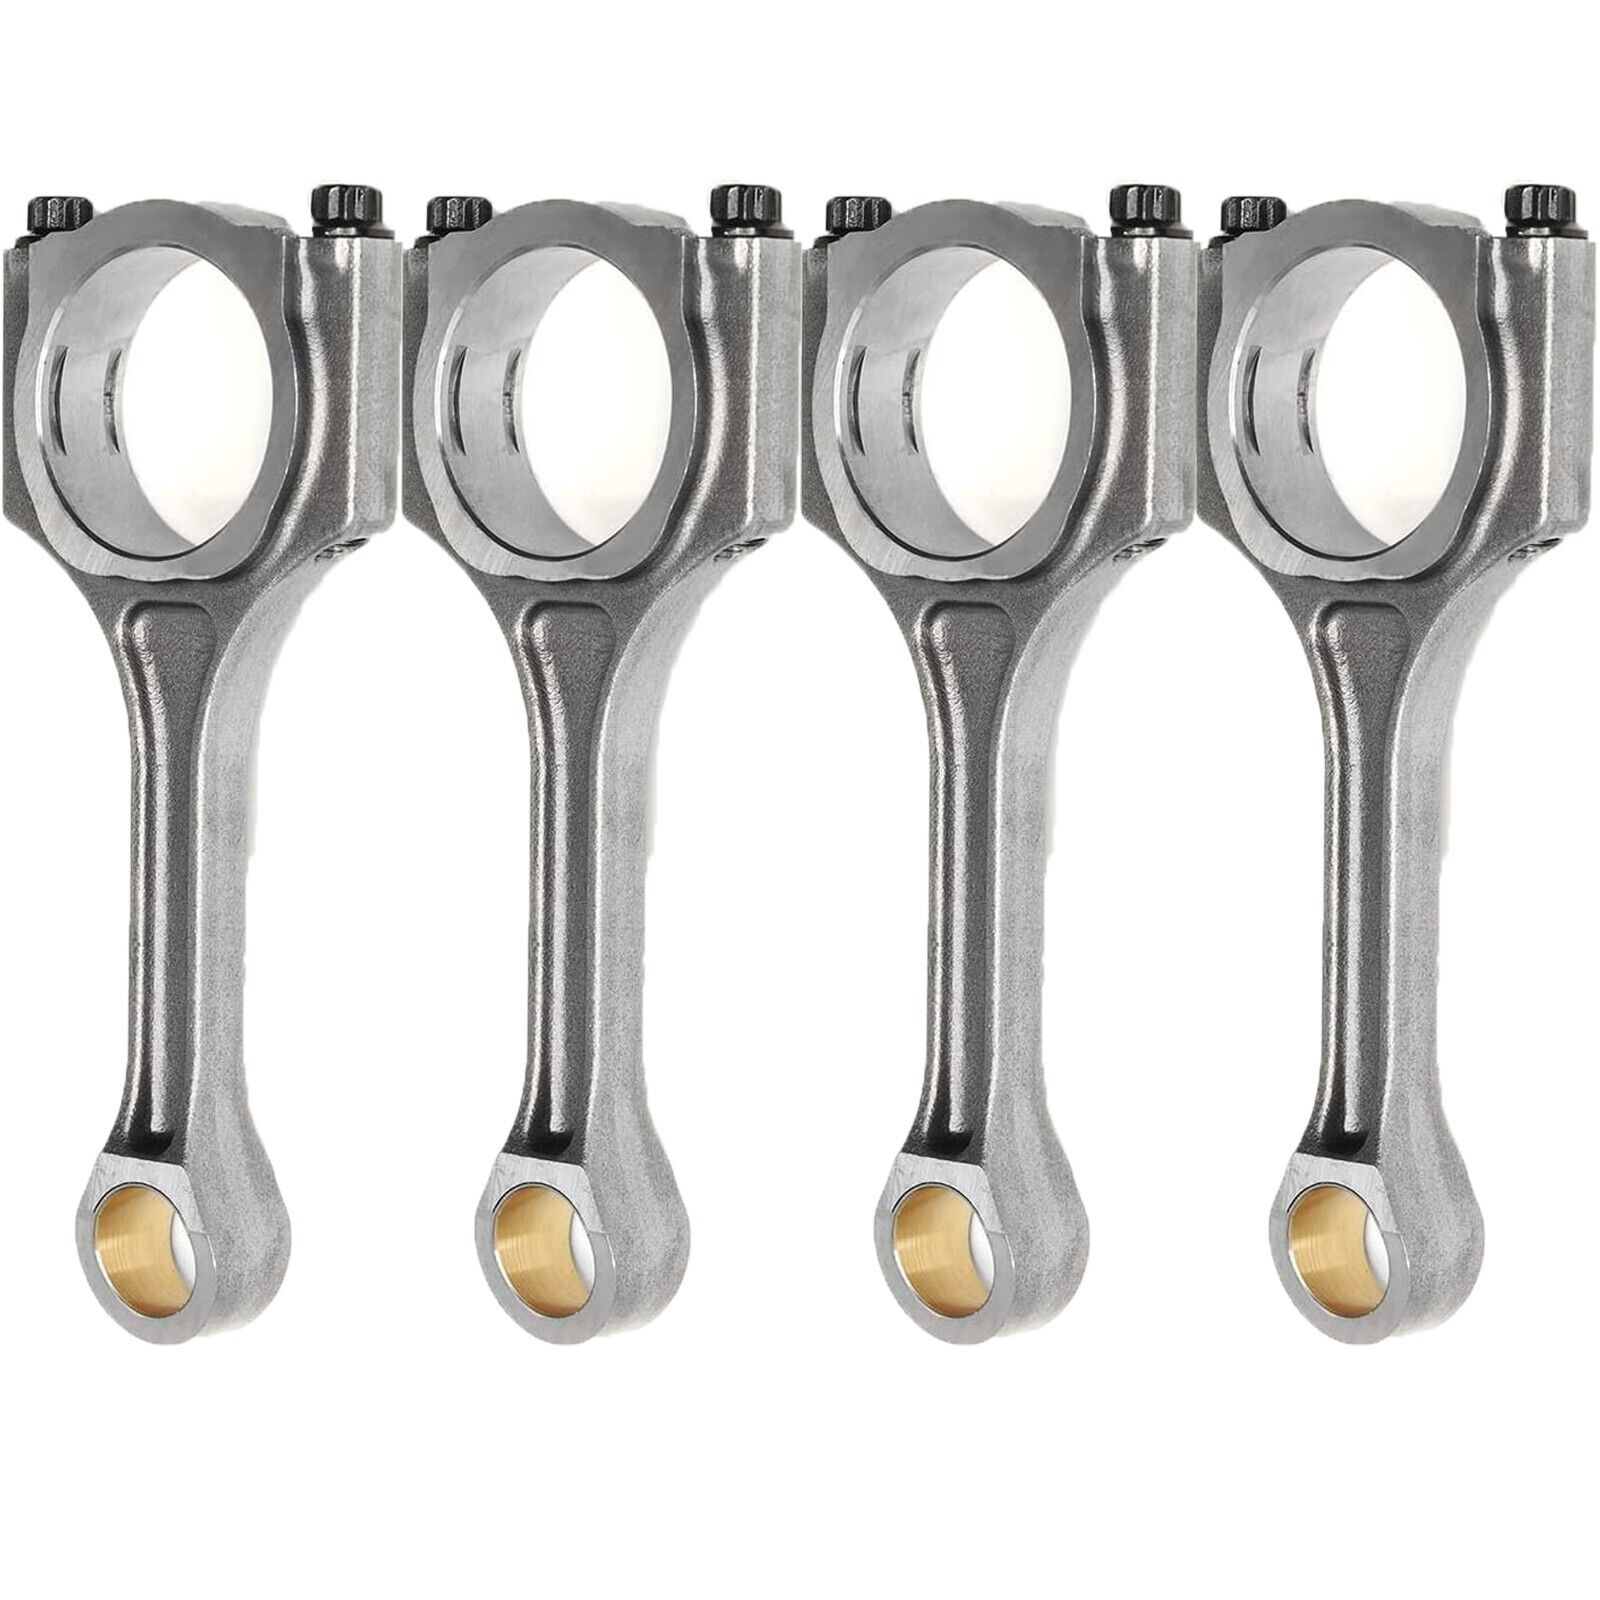 Crankshaft Connecting Rod Piston Rings Gasket Kits For Hyundai Kia Optima 2.4L